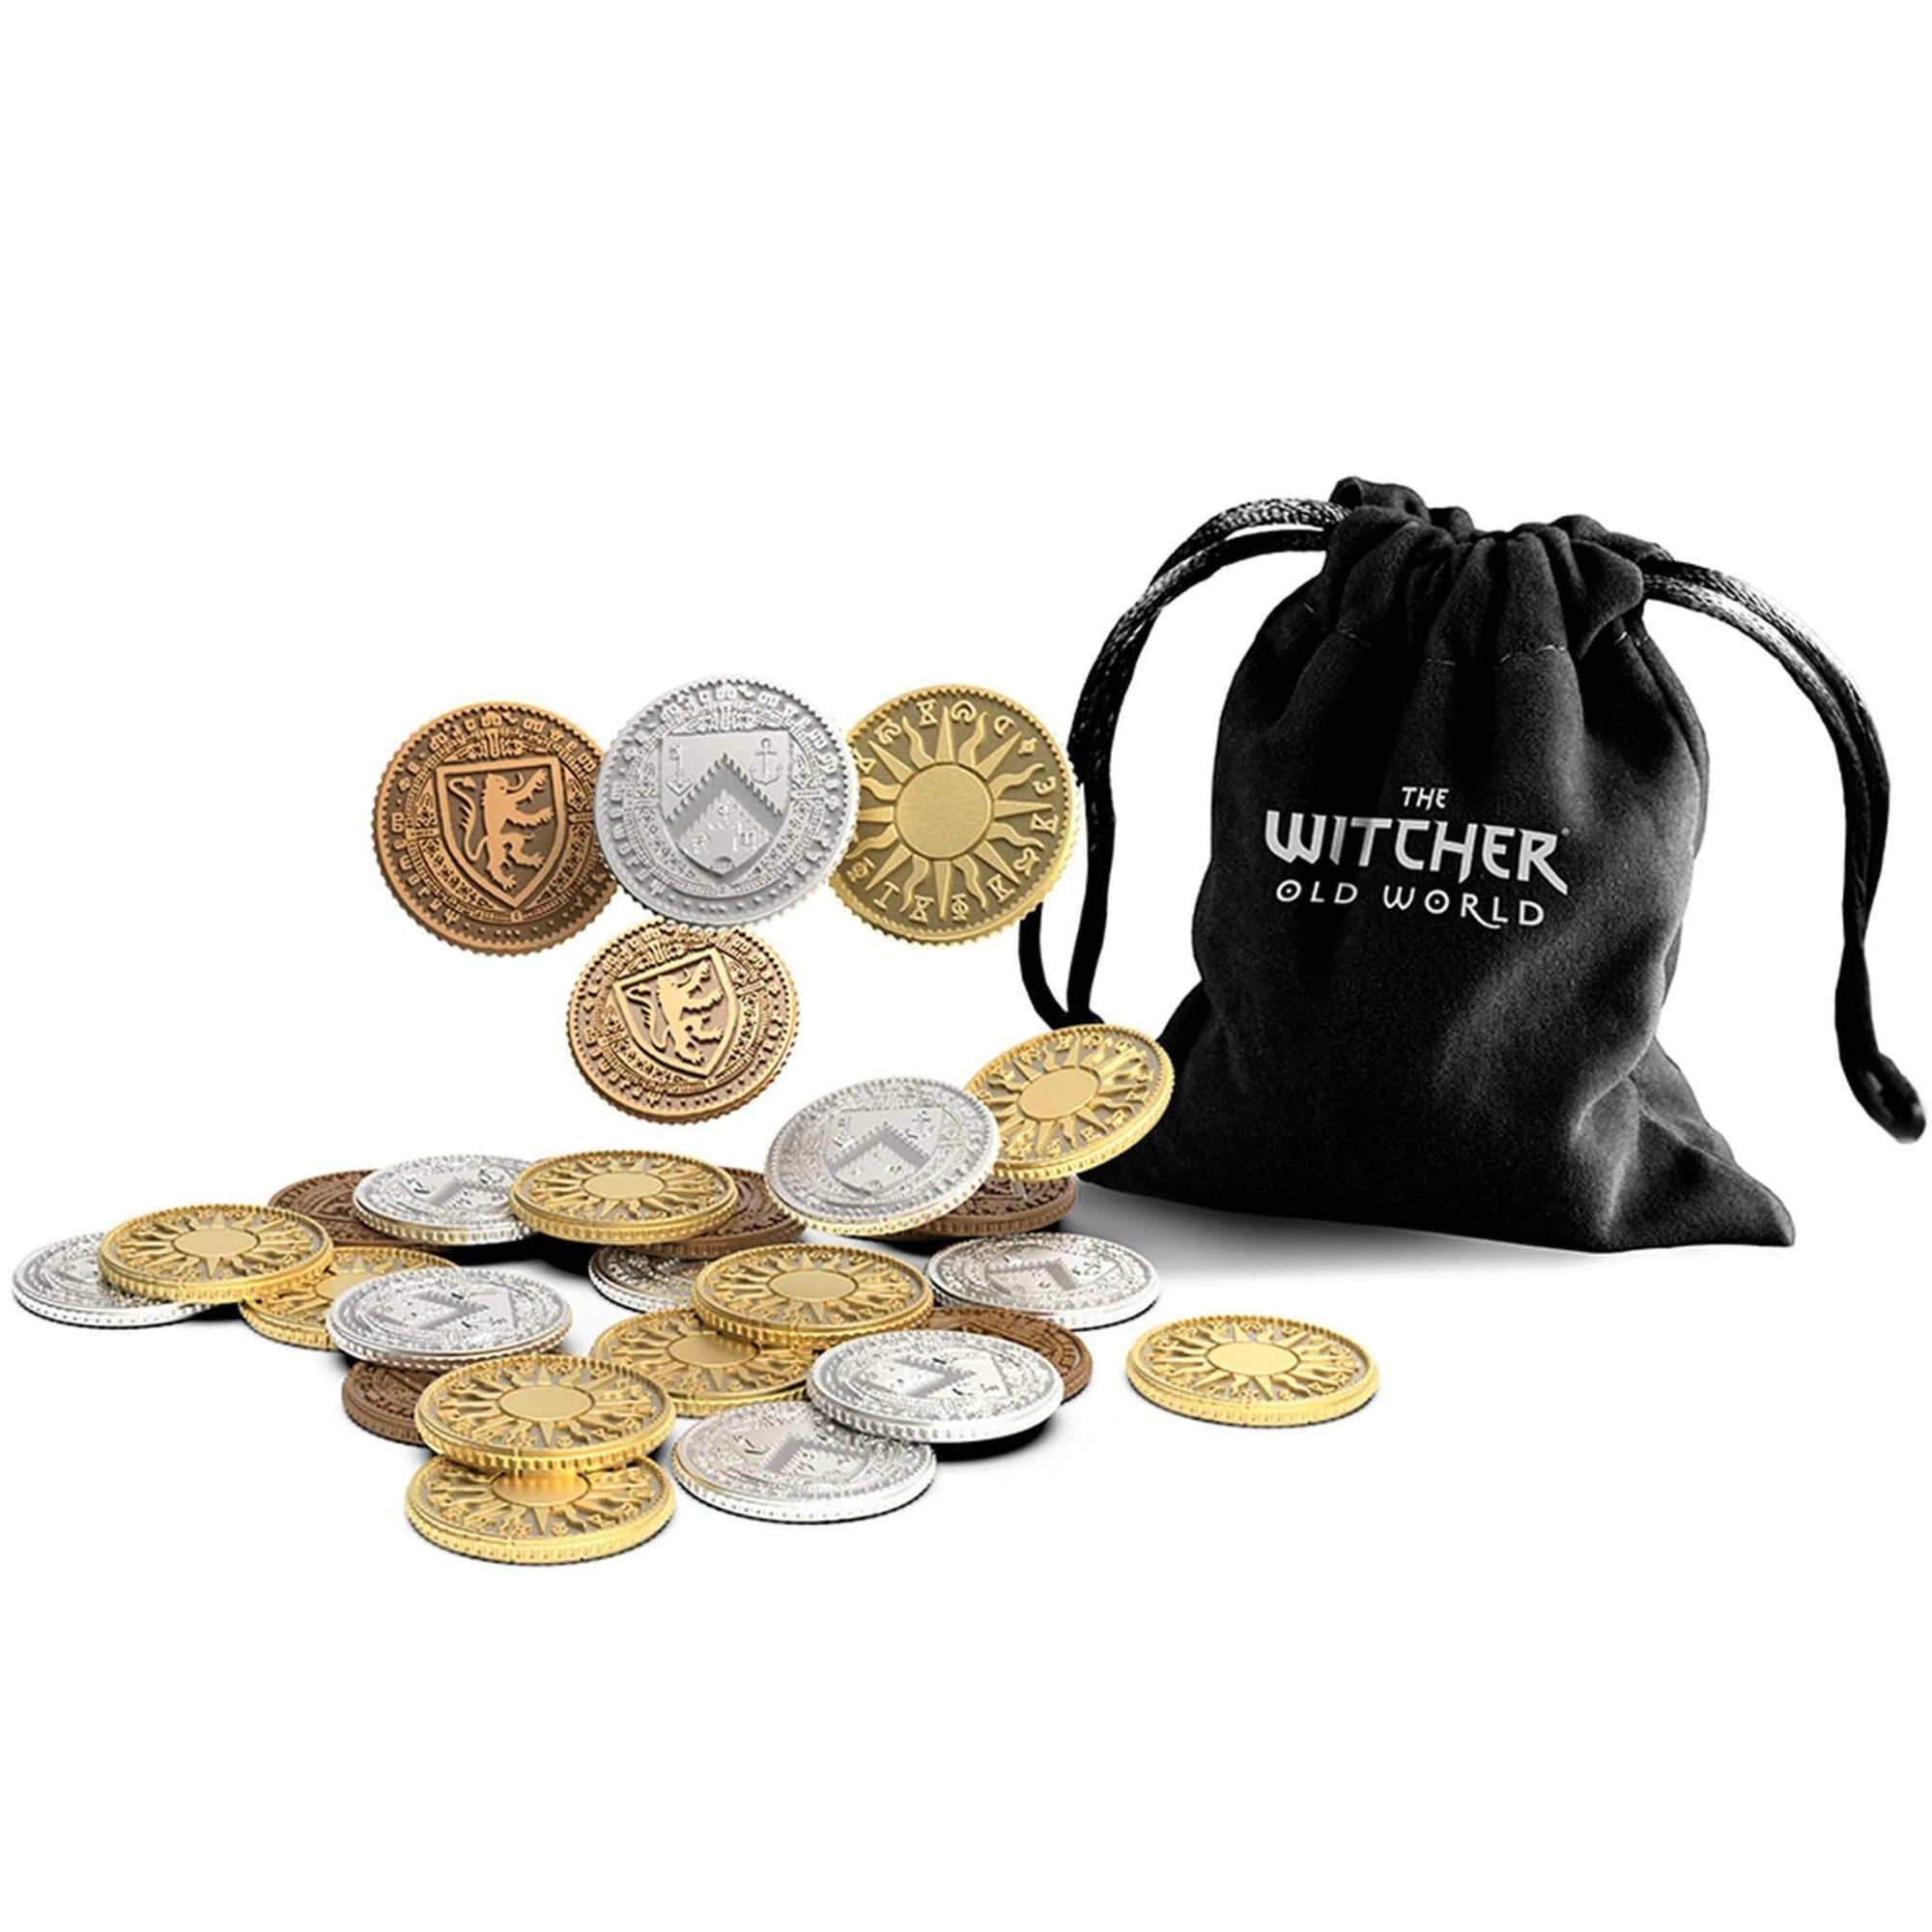 The Witcher: Old World Metal Coins (Kickstarter Précommande spécial) Accessoire de jeu de société Kickstarter Go On Board KS001114H